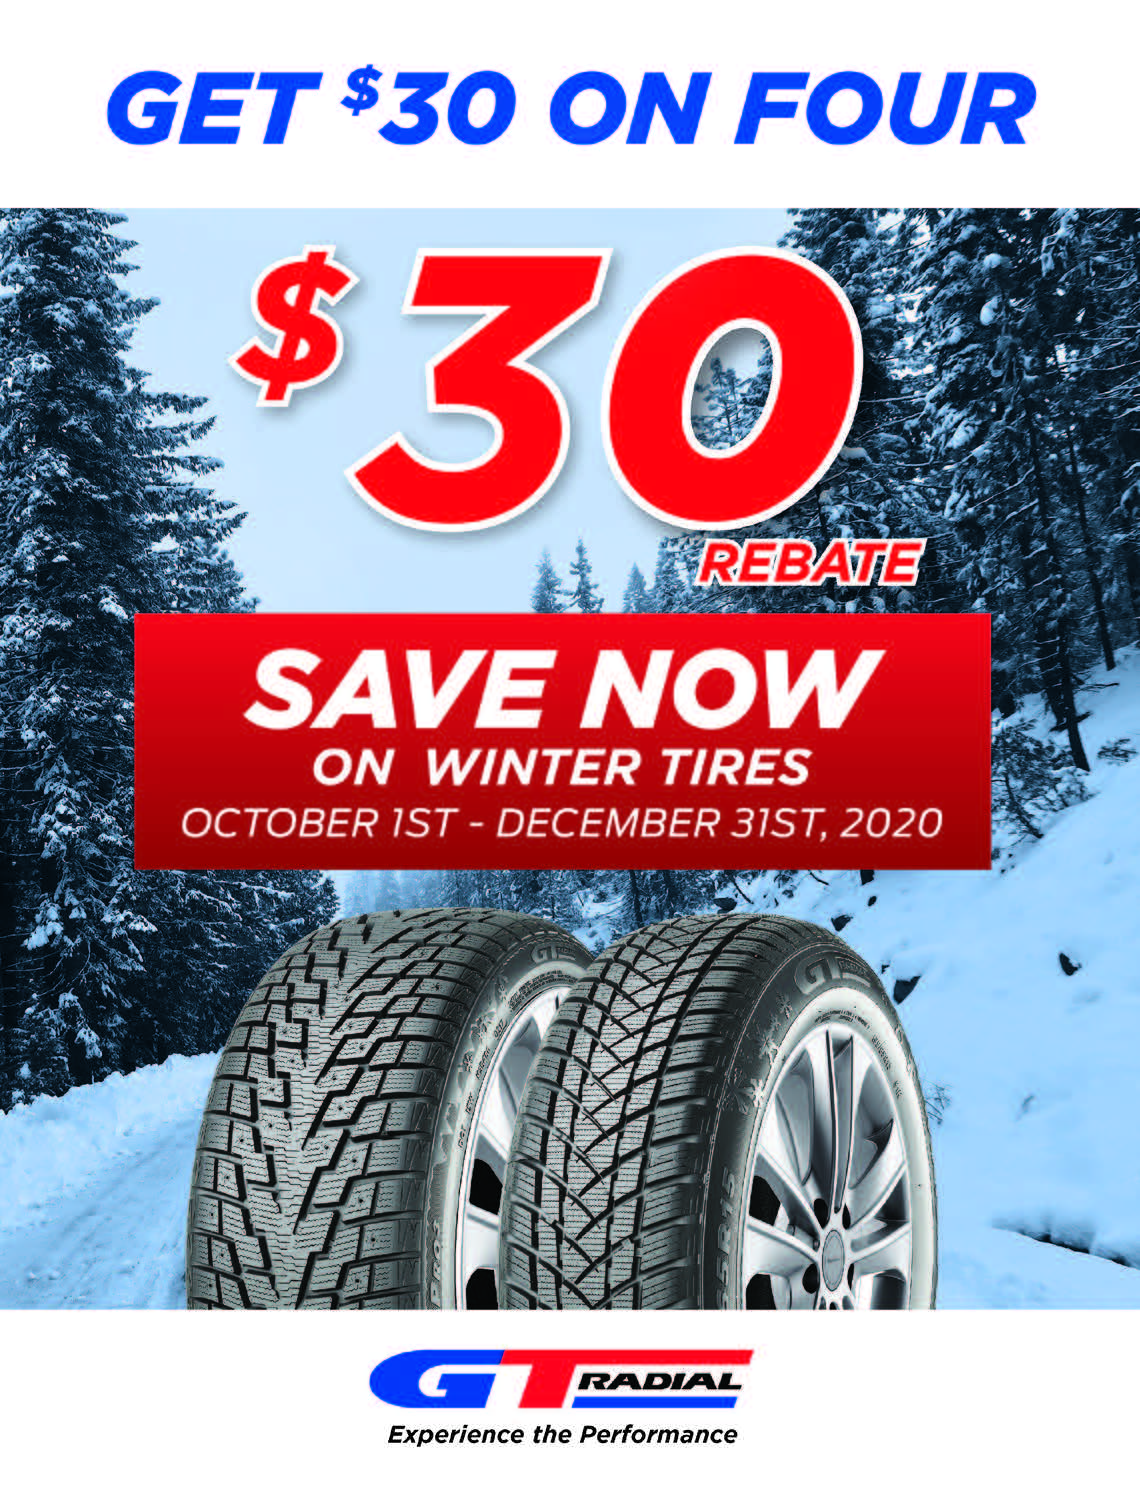 yokohama-tires-winter-all-season-signature-tire